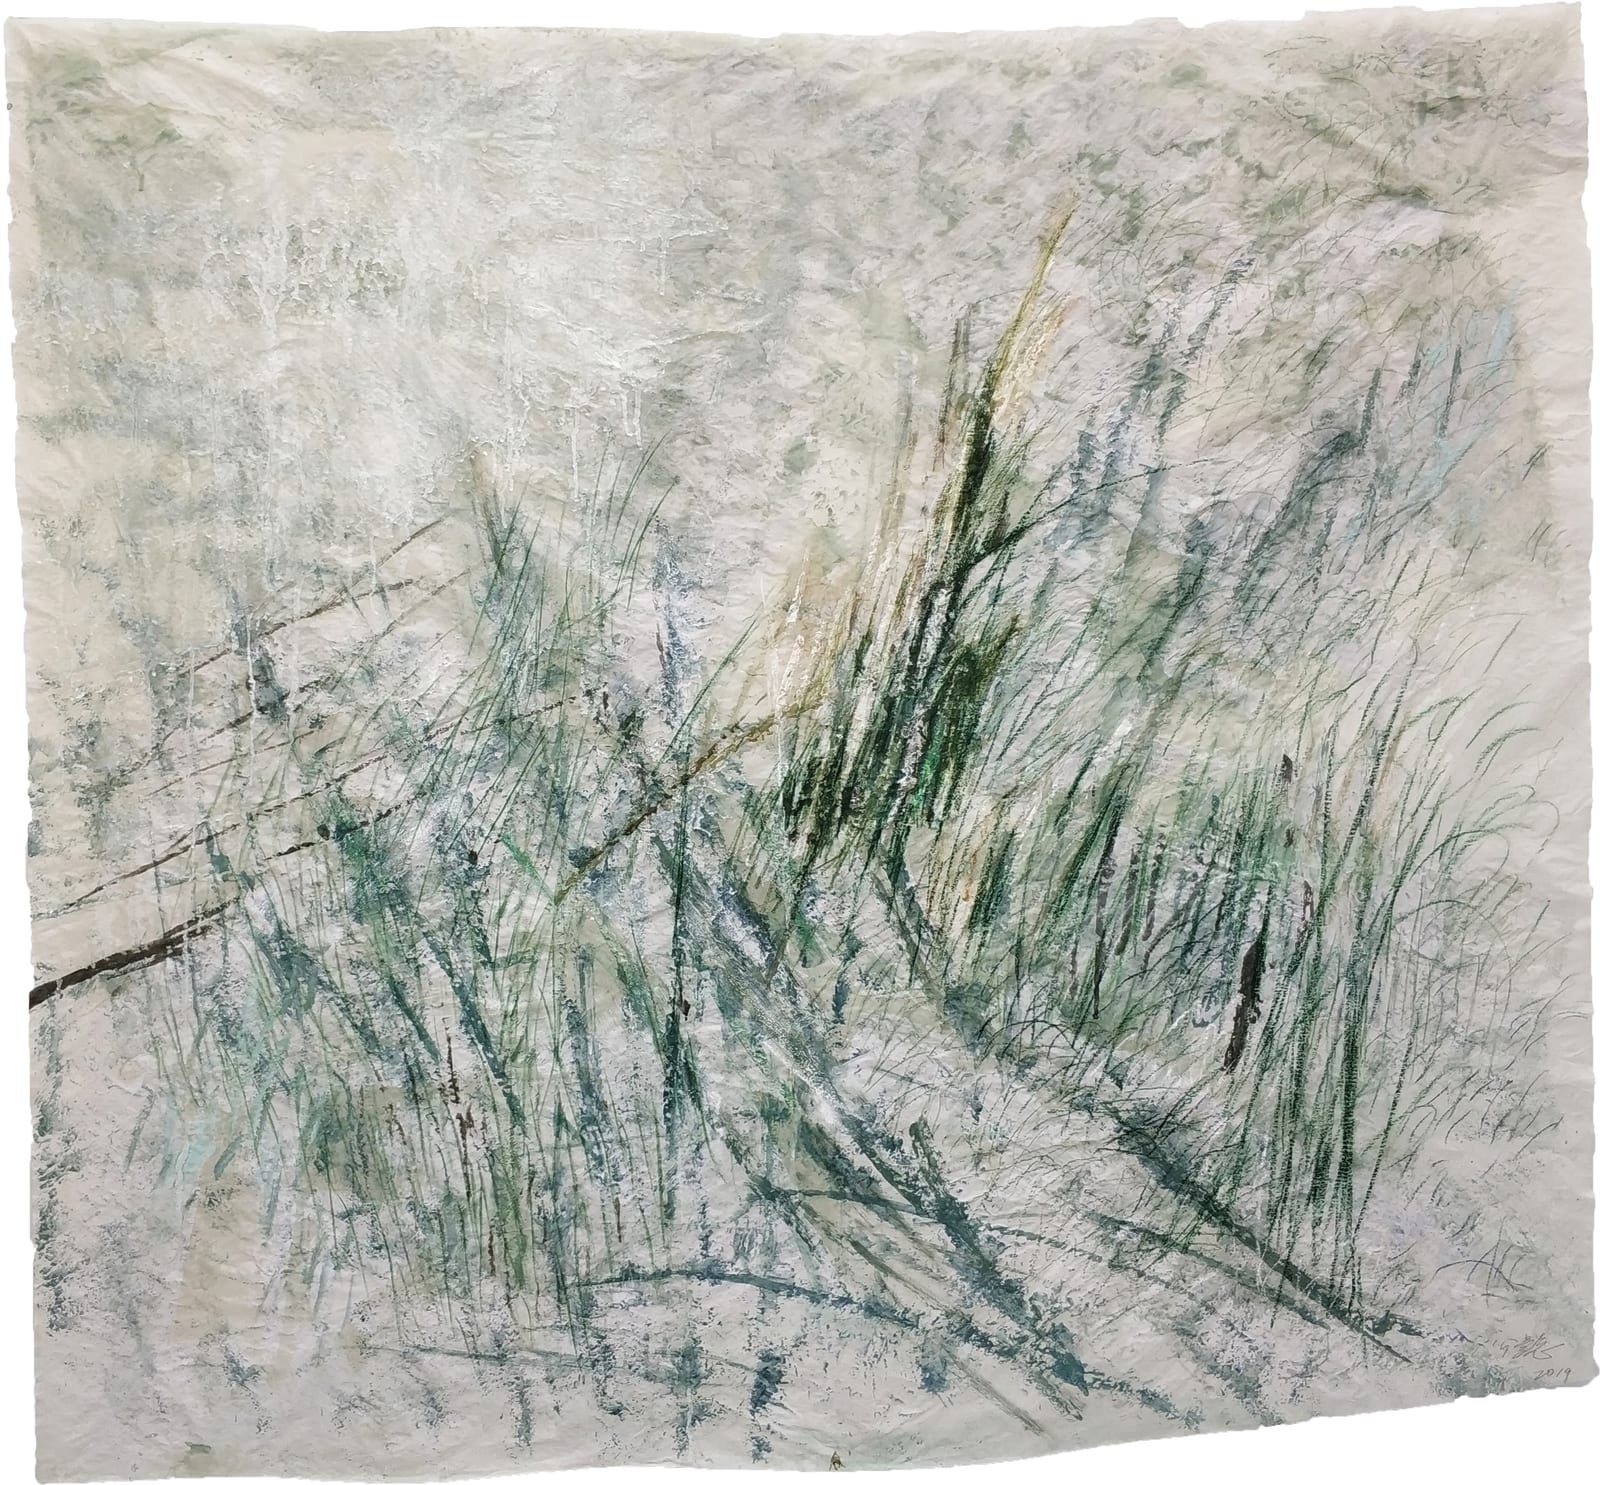 Wang Gongyi 王公懿, Leaves of Grass No. 5 草葉集之五, 2019